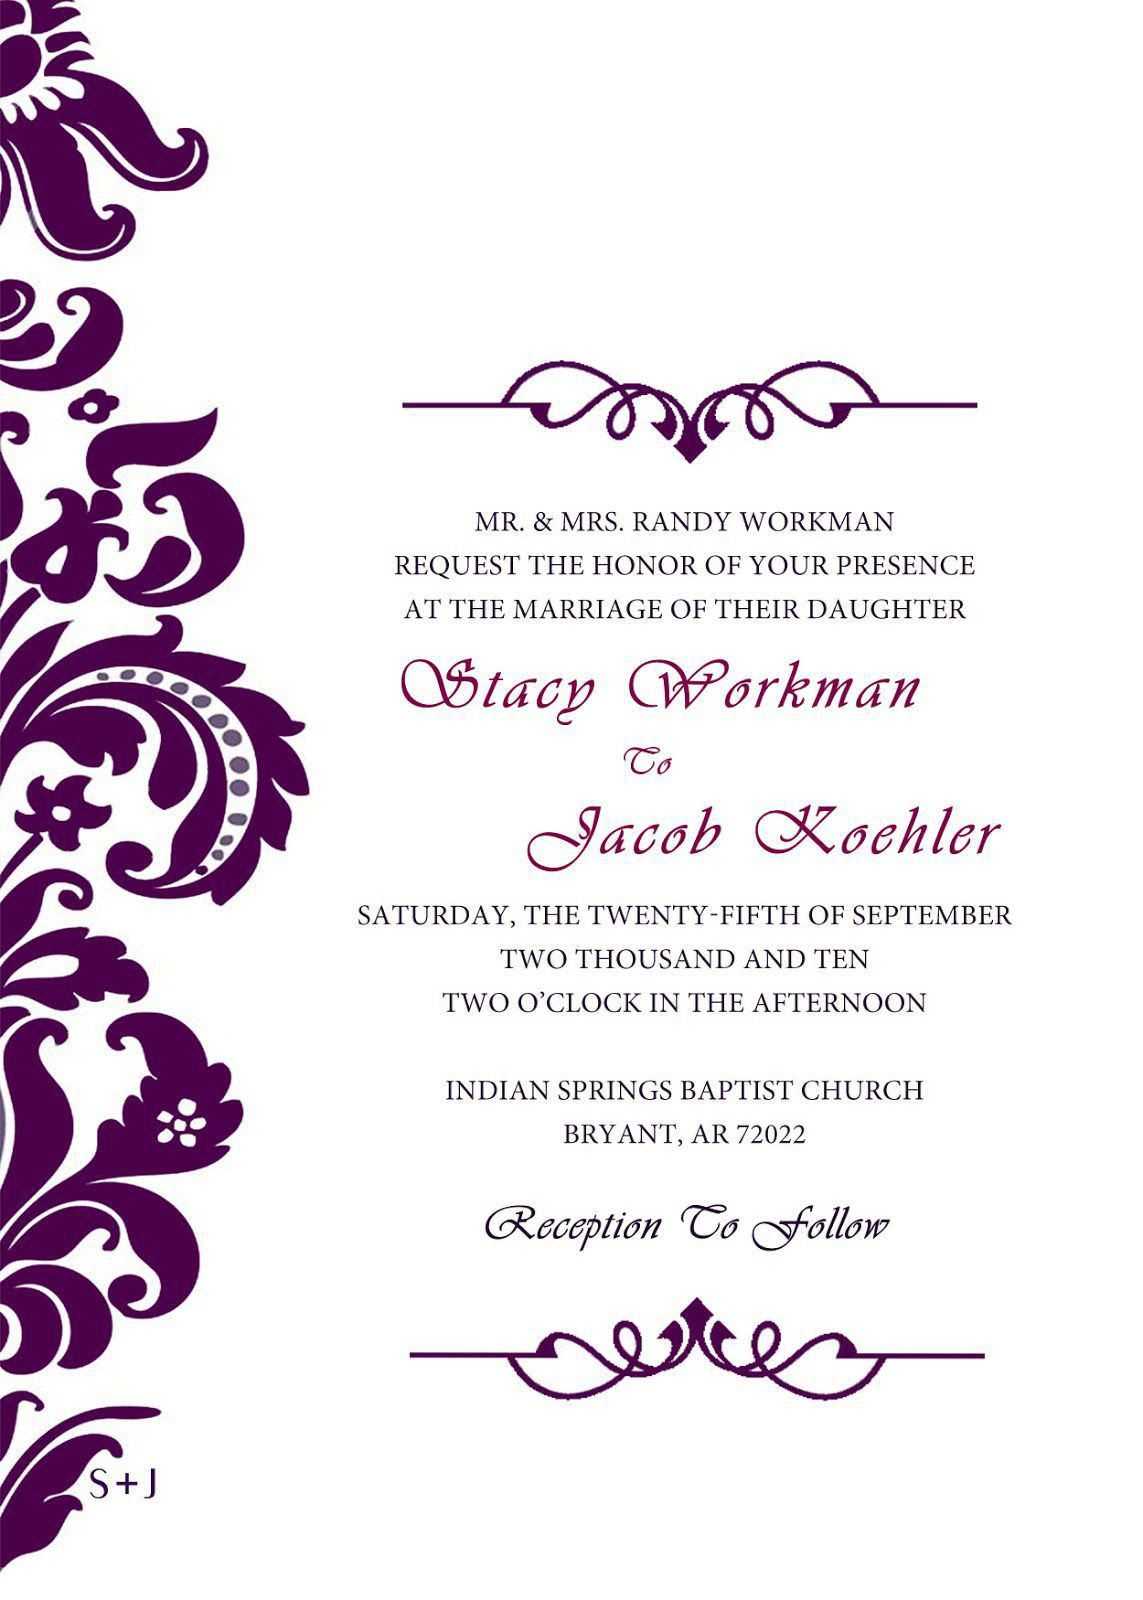 Wedding Invitation Card Template Microsoft Word Indian Best In Invitation Cards Templates For Marriage